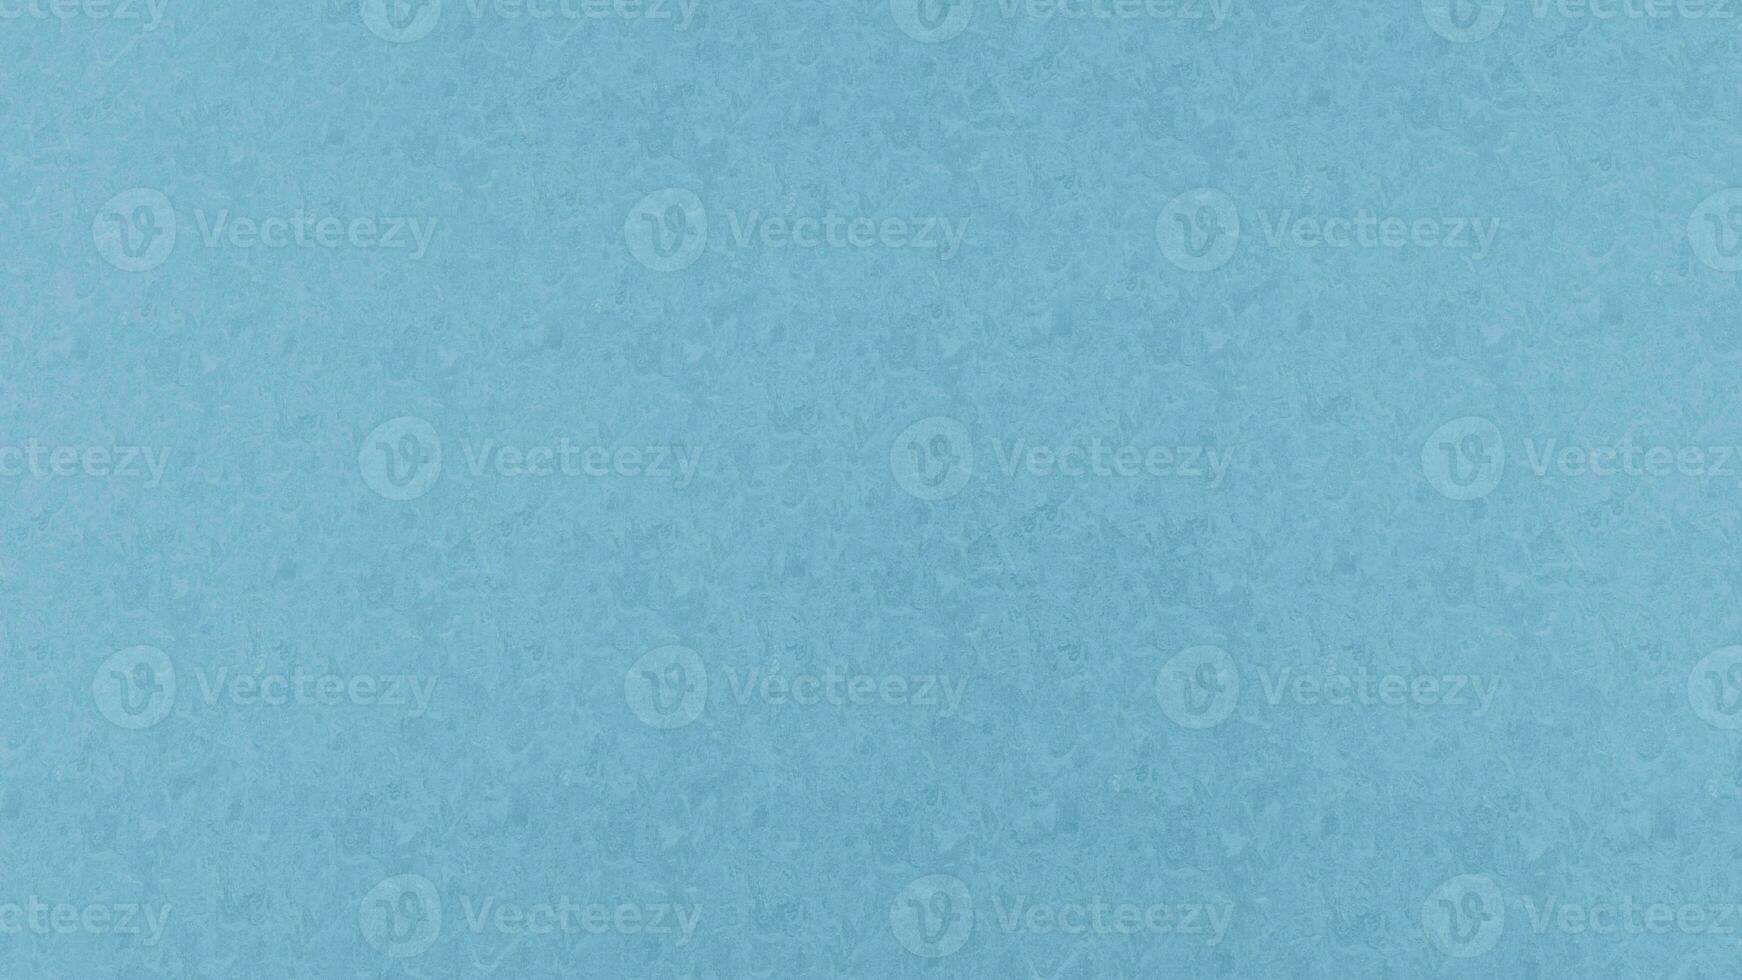 concreto textura azul para luxo folheto convite de Anúncios ou rede modelo papel foto